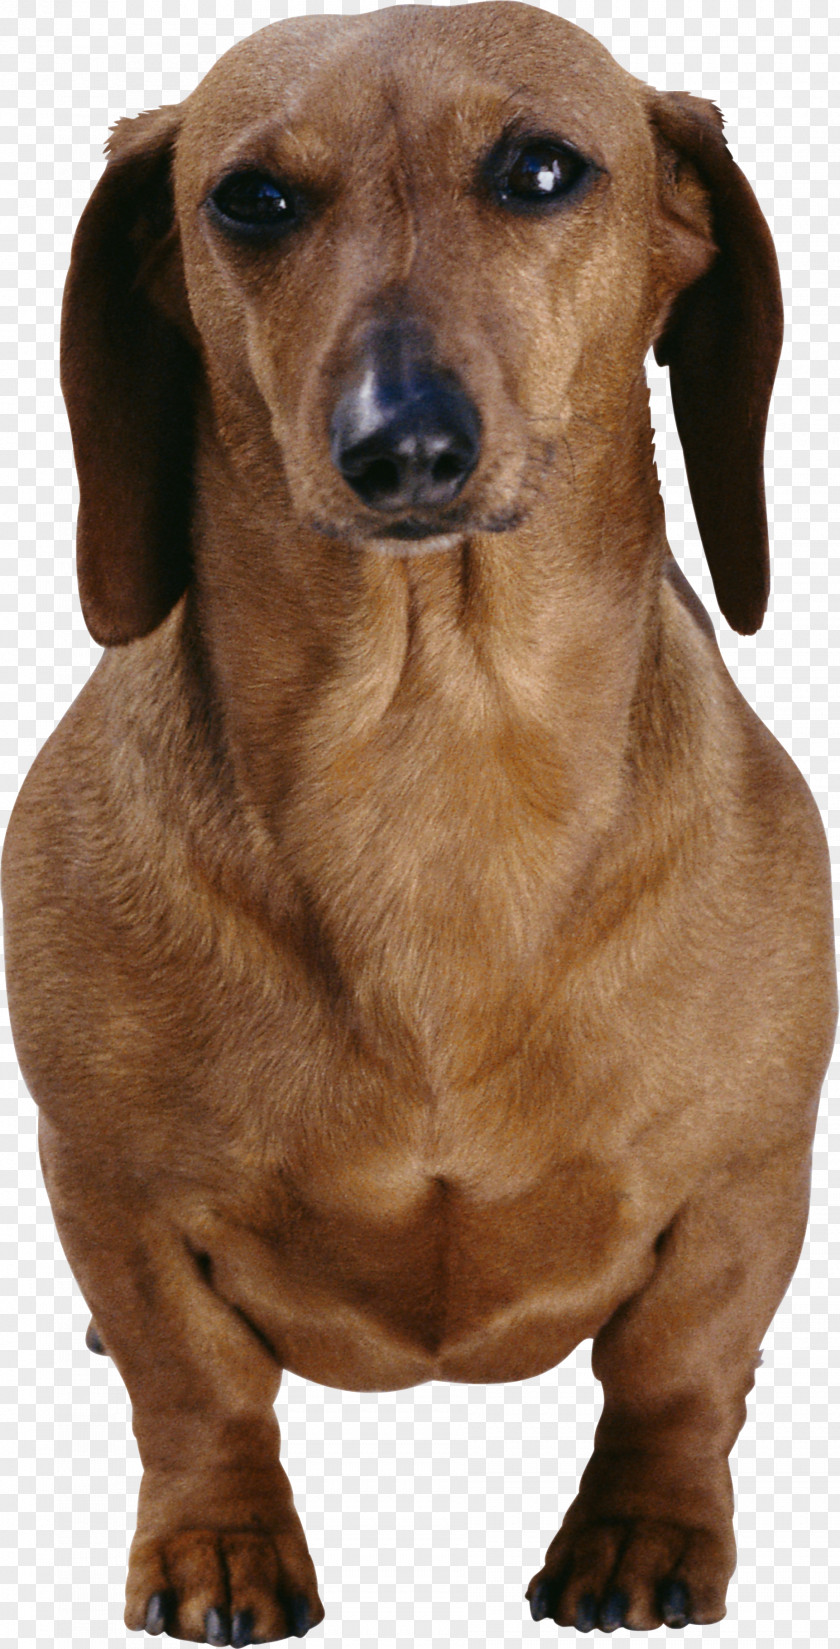 Allergy Dachshund Longdog Cat Dog Breed Pet PNG